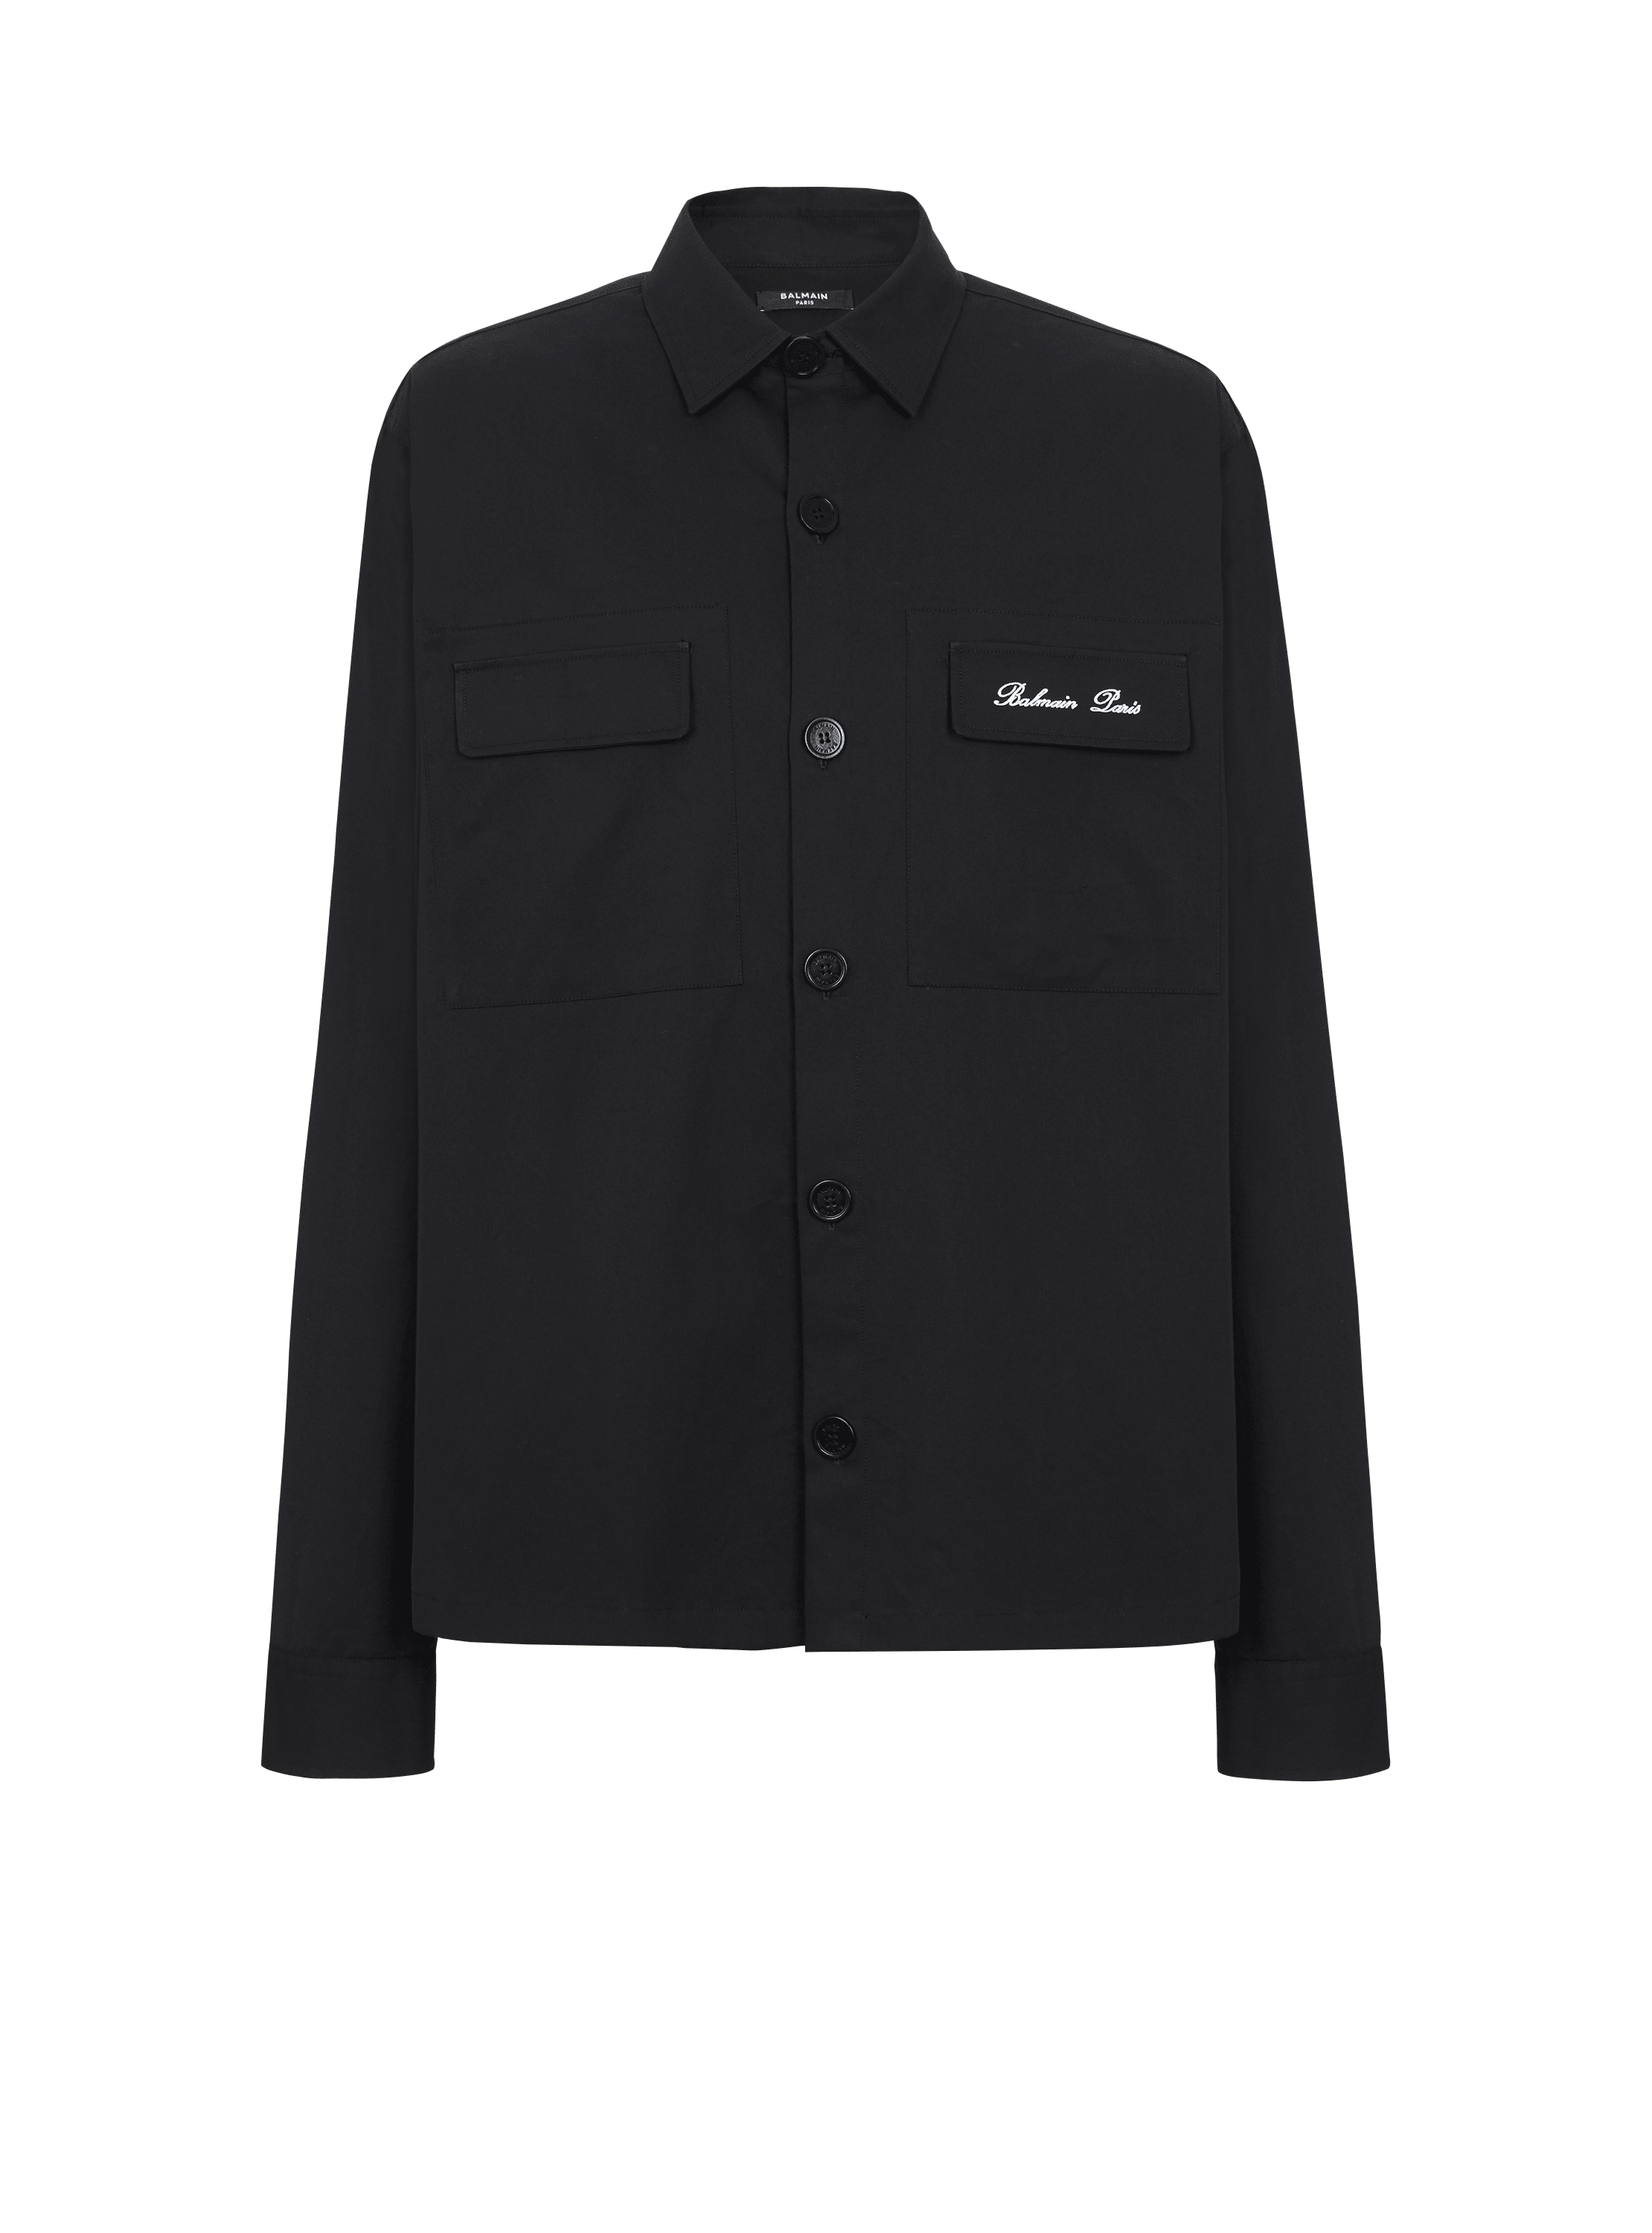 Balmain 标志性外套衬衫, black, hi-res